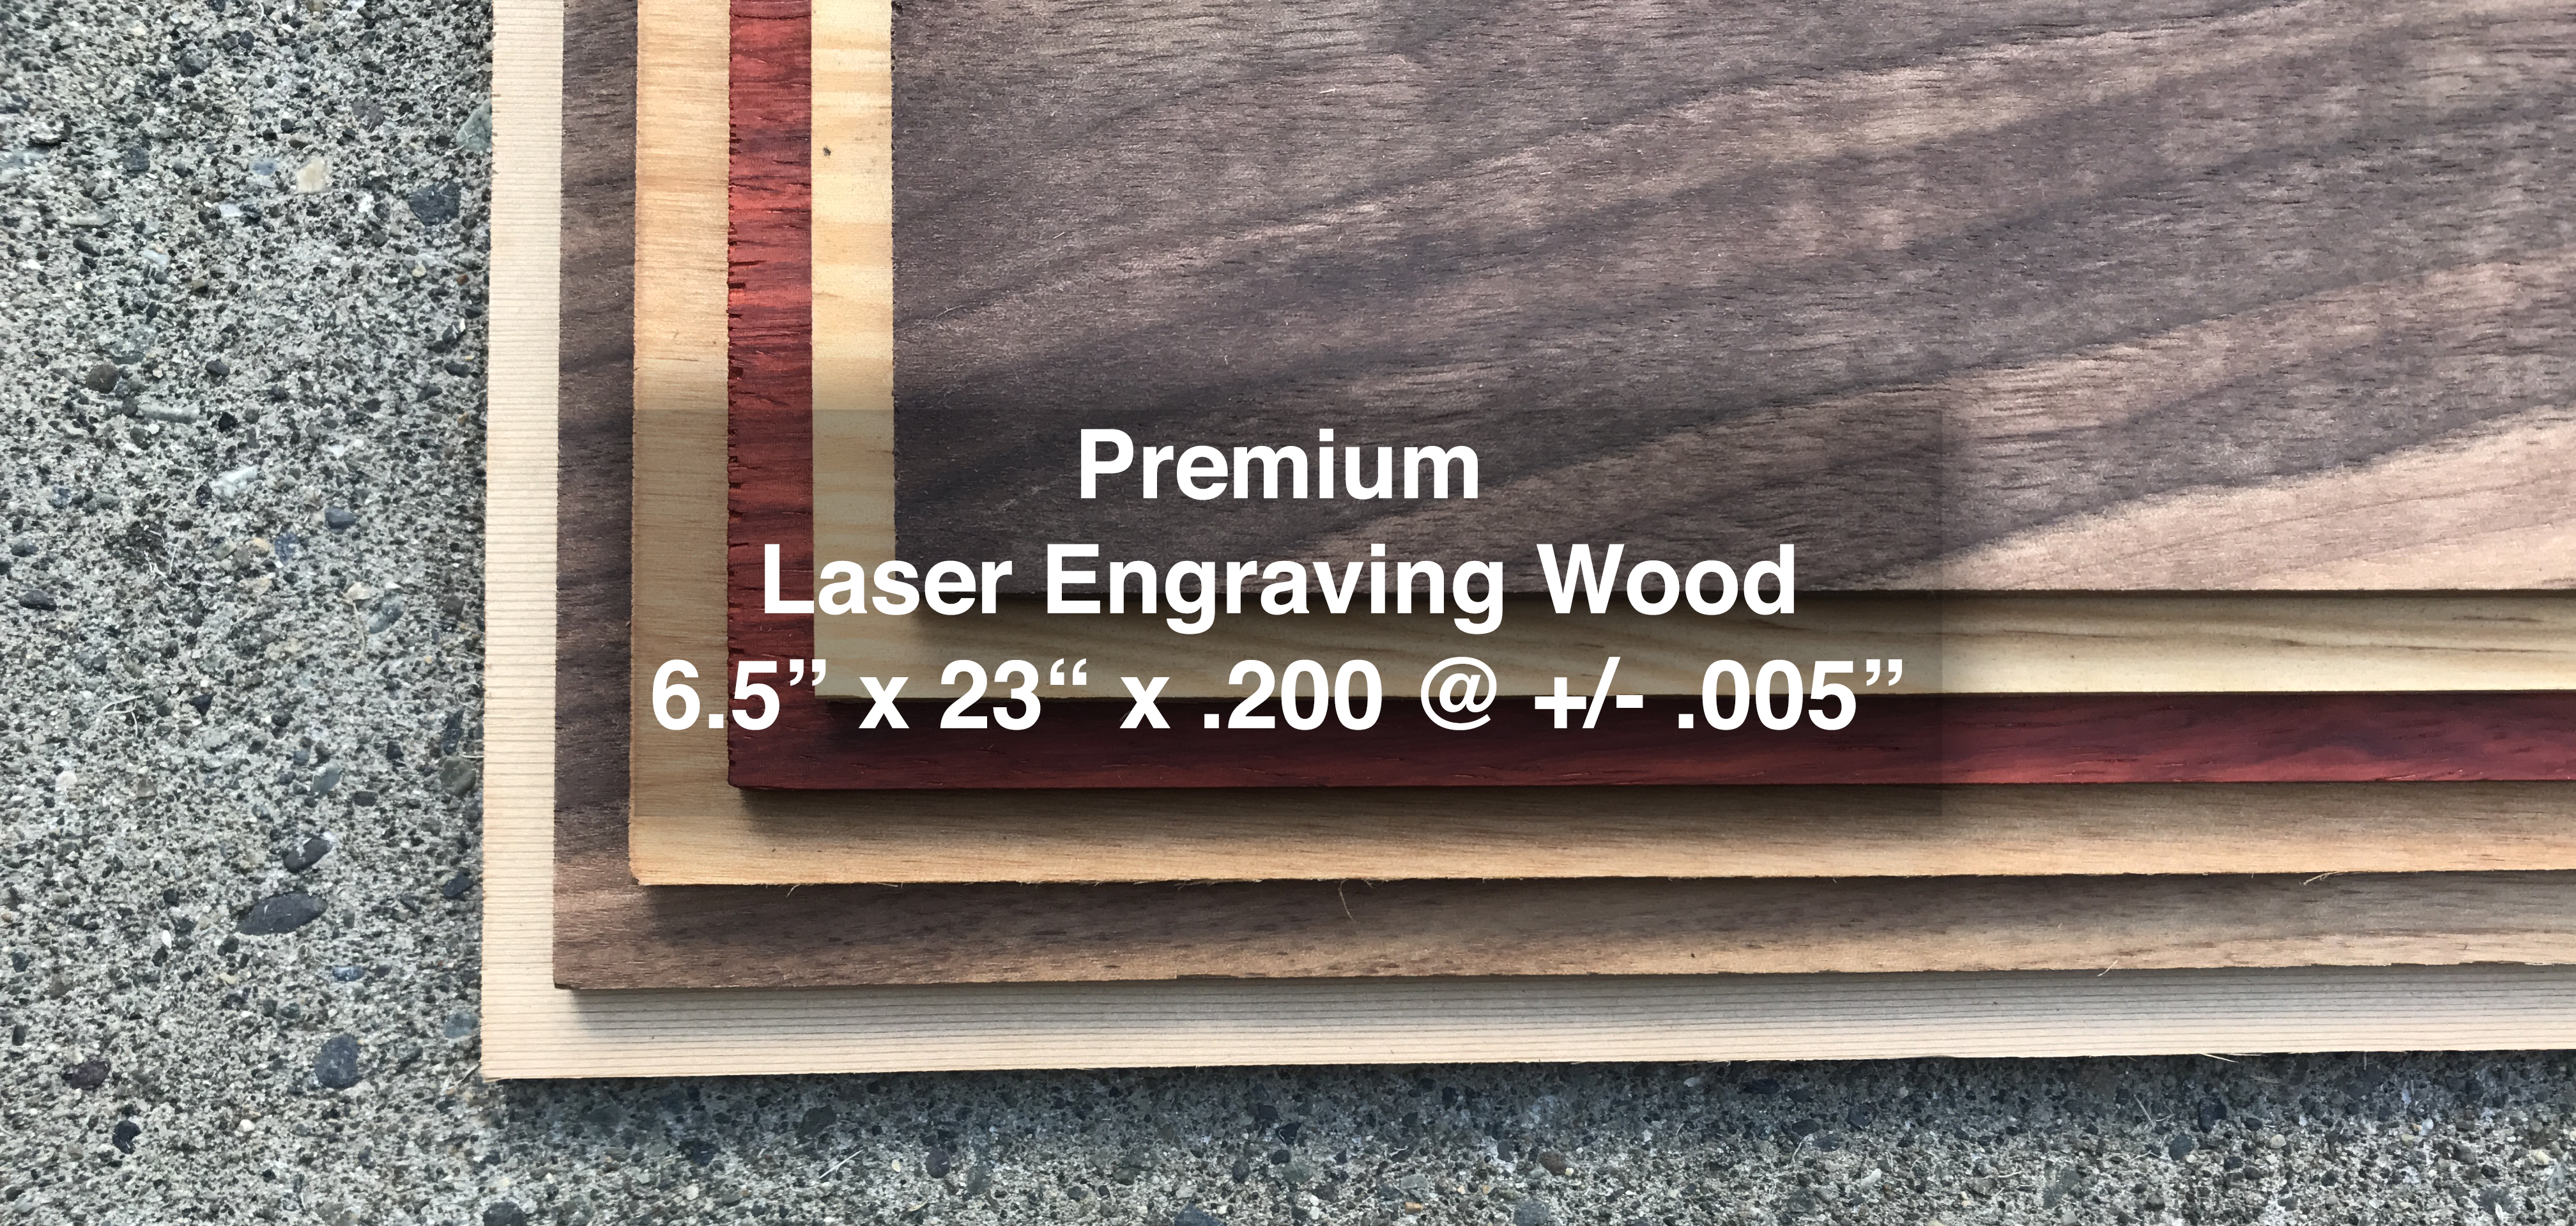 laser engraving wood background